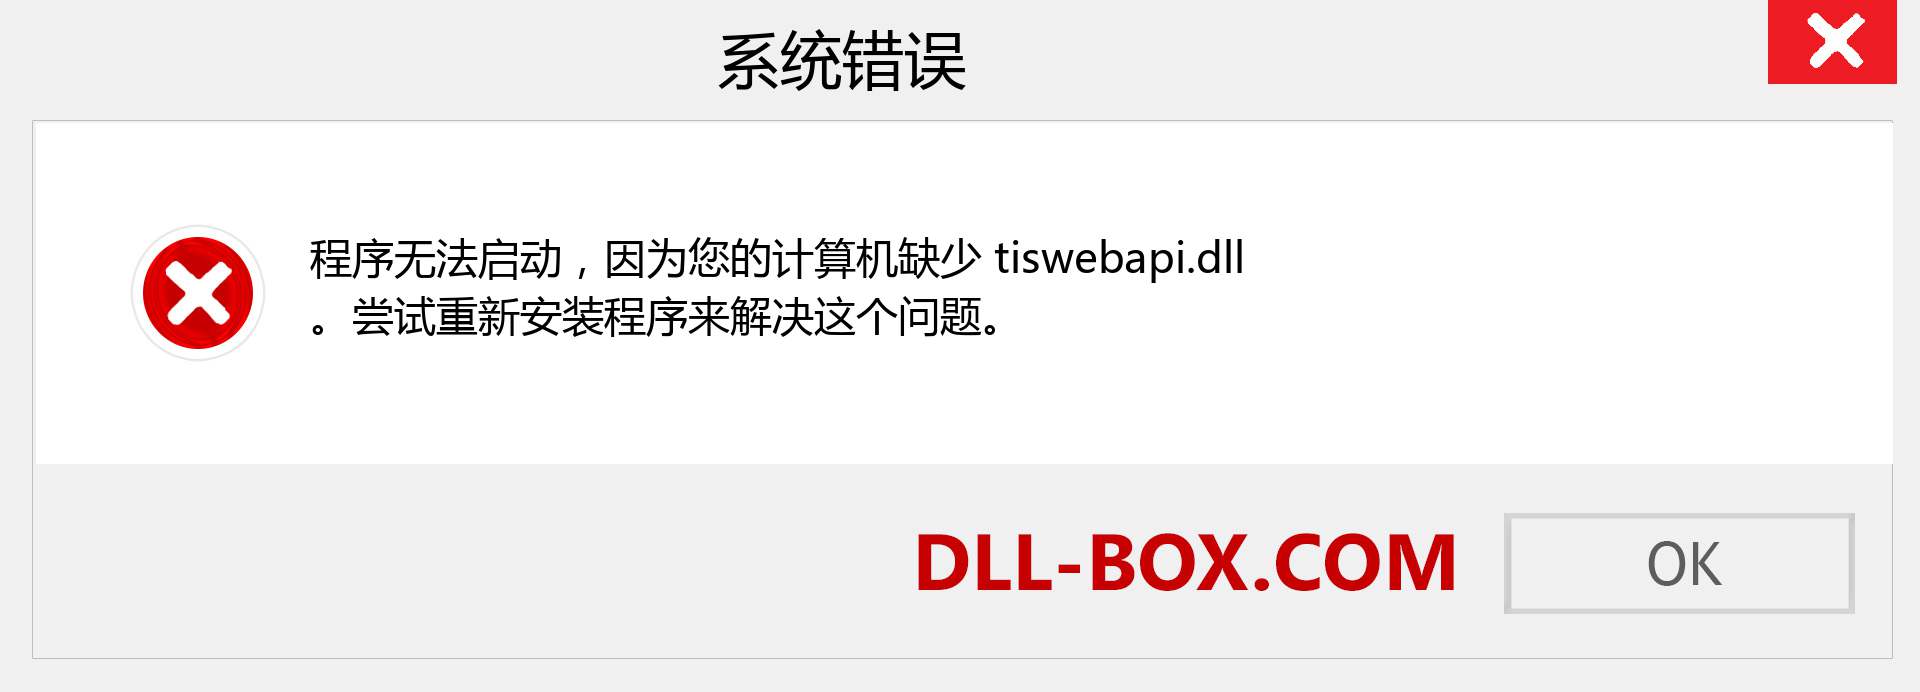 tiswebapi.dll 文件丢失？。 适用于 Windows 7、8、10 的下载 - 修复 Windows、照片、图像上的 tiswebapi dll 丢失错误